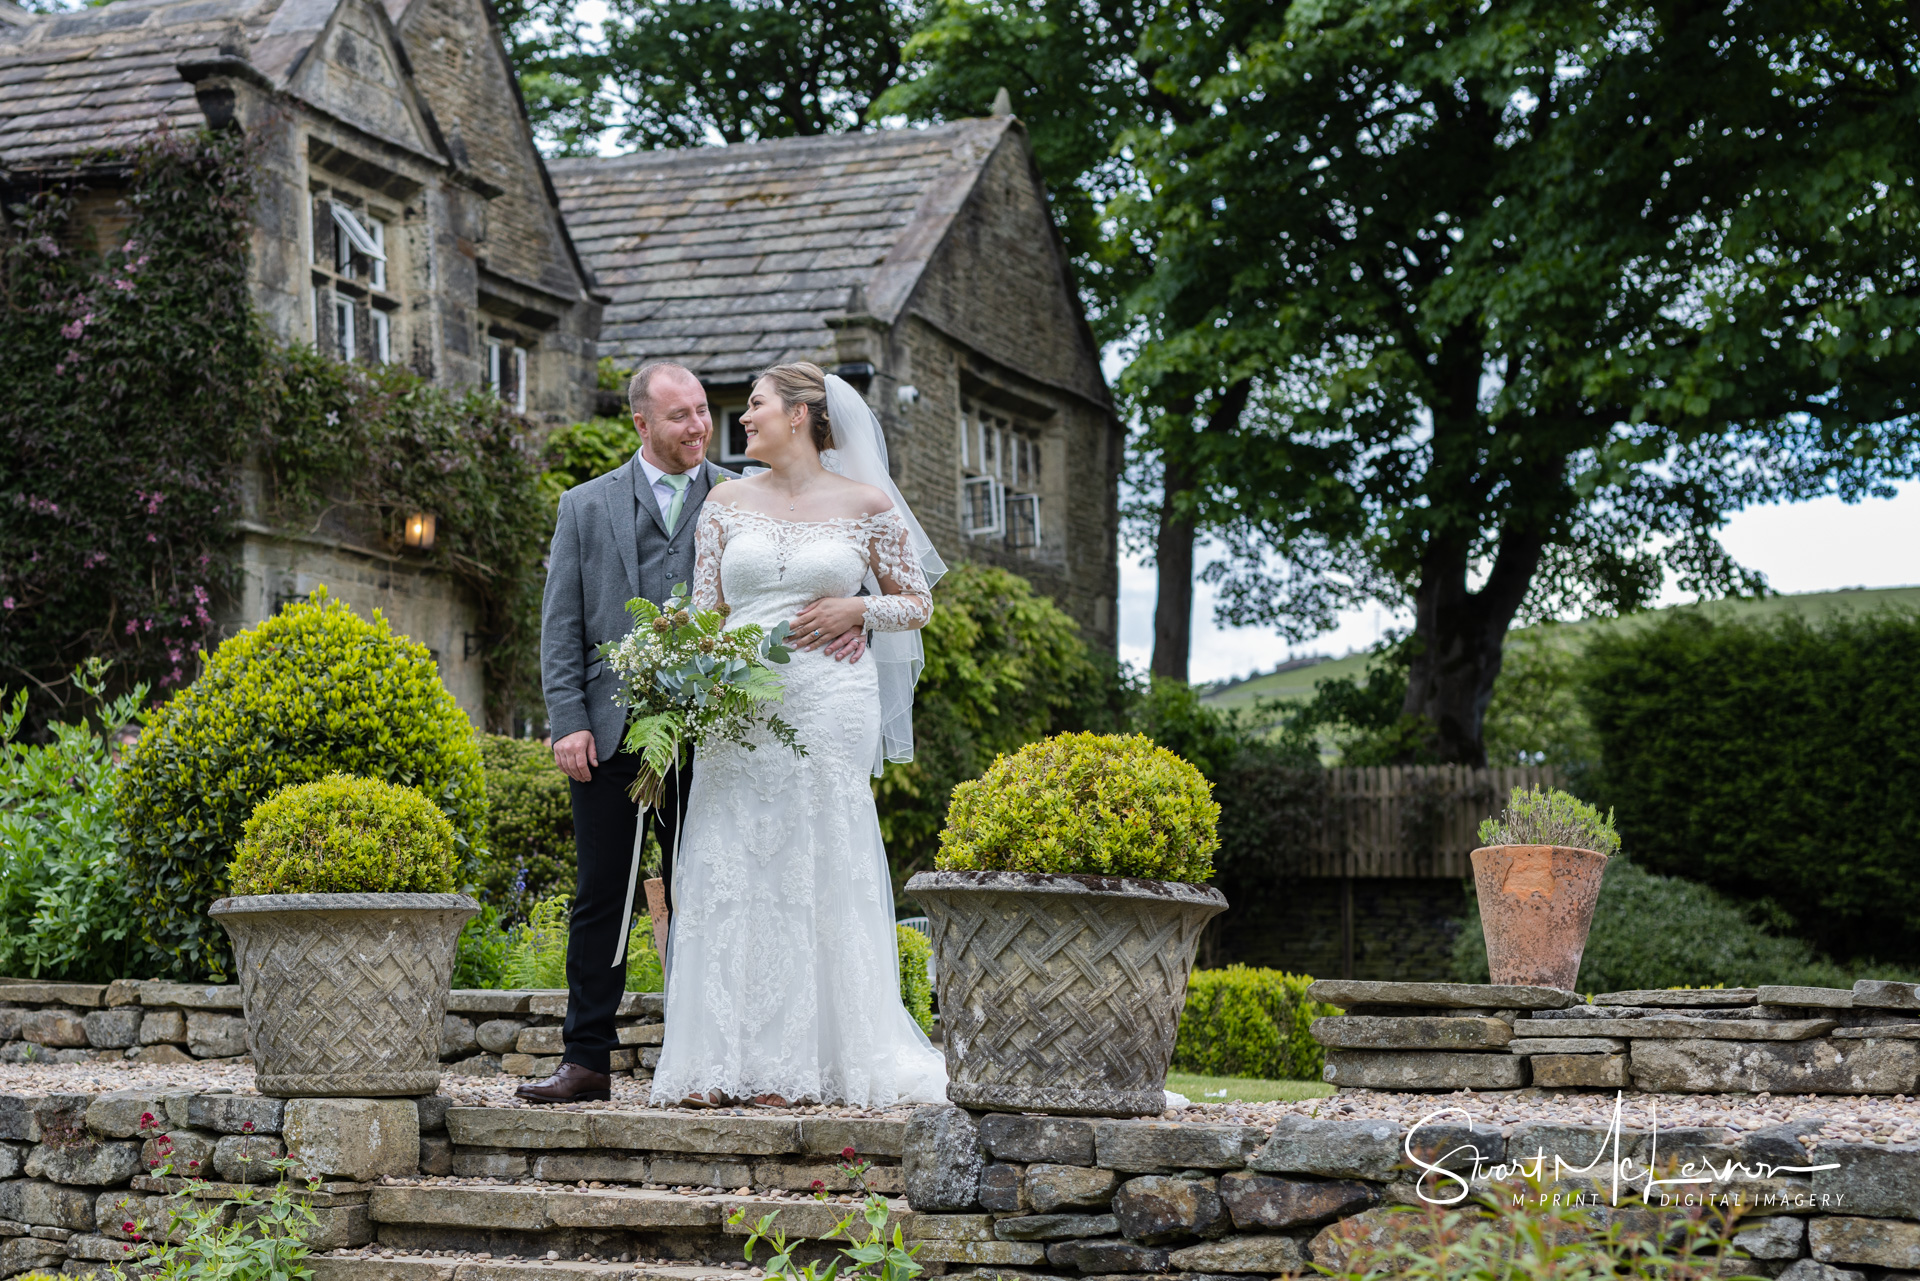 Wedding – Steph and Matt at Holdsworth House